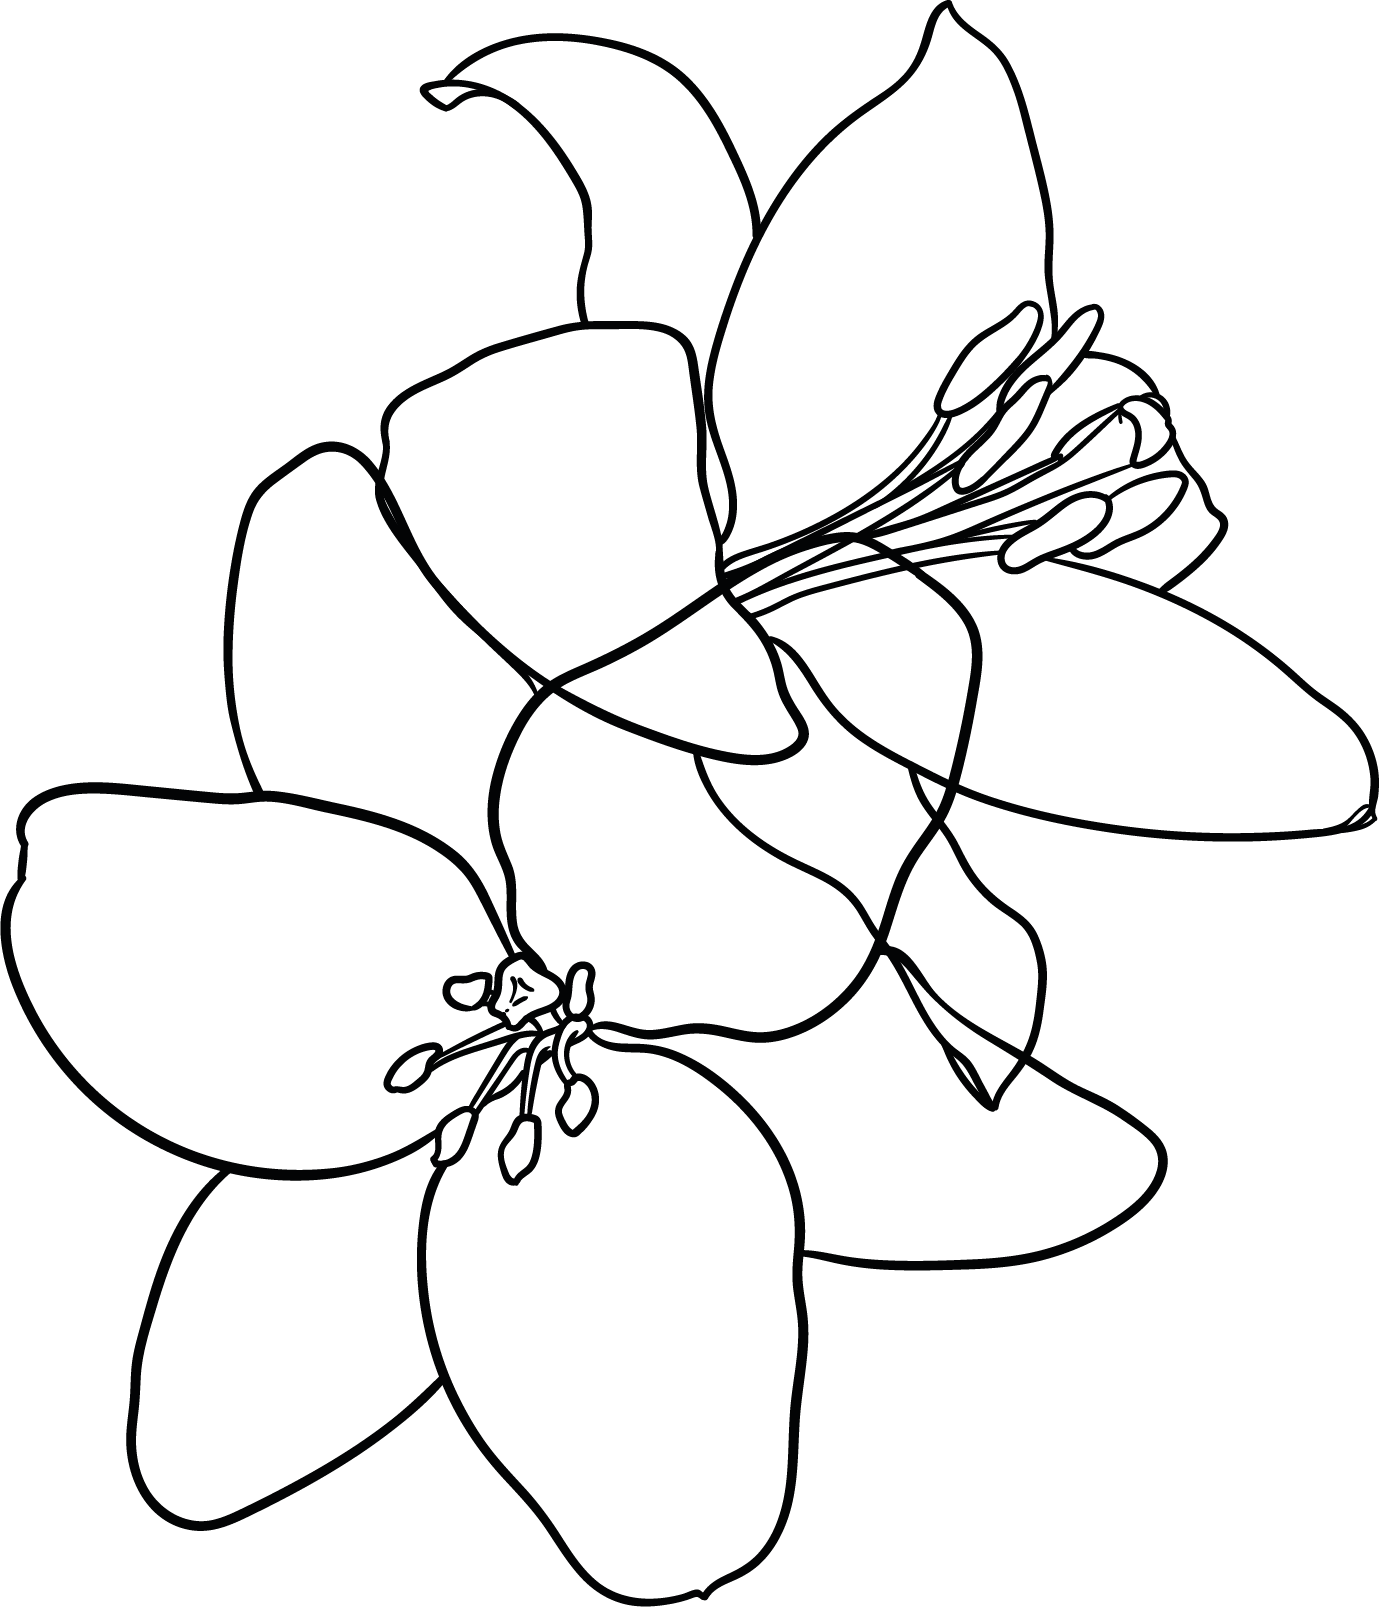 Pension Noack Zeichnung Blume Neufinsing Lineart